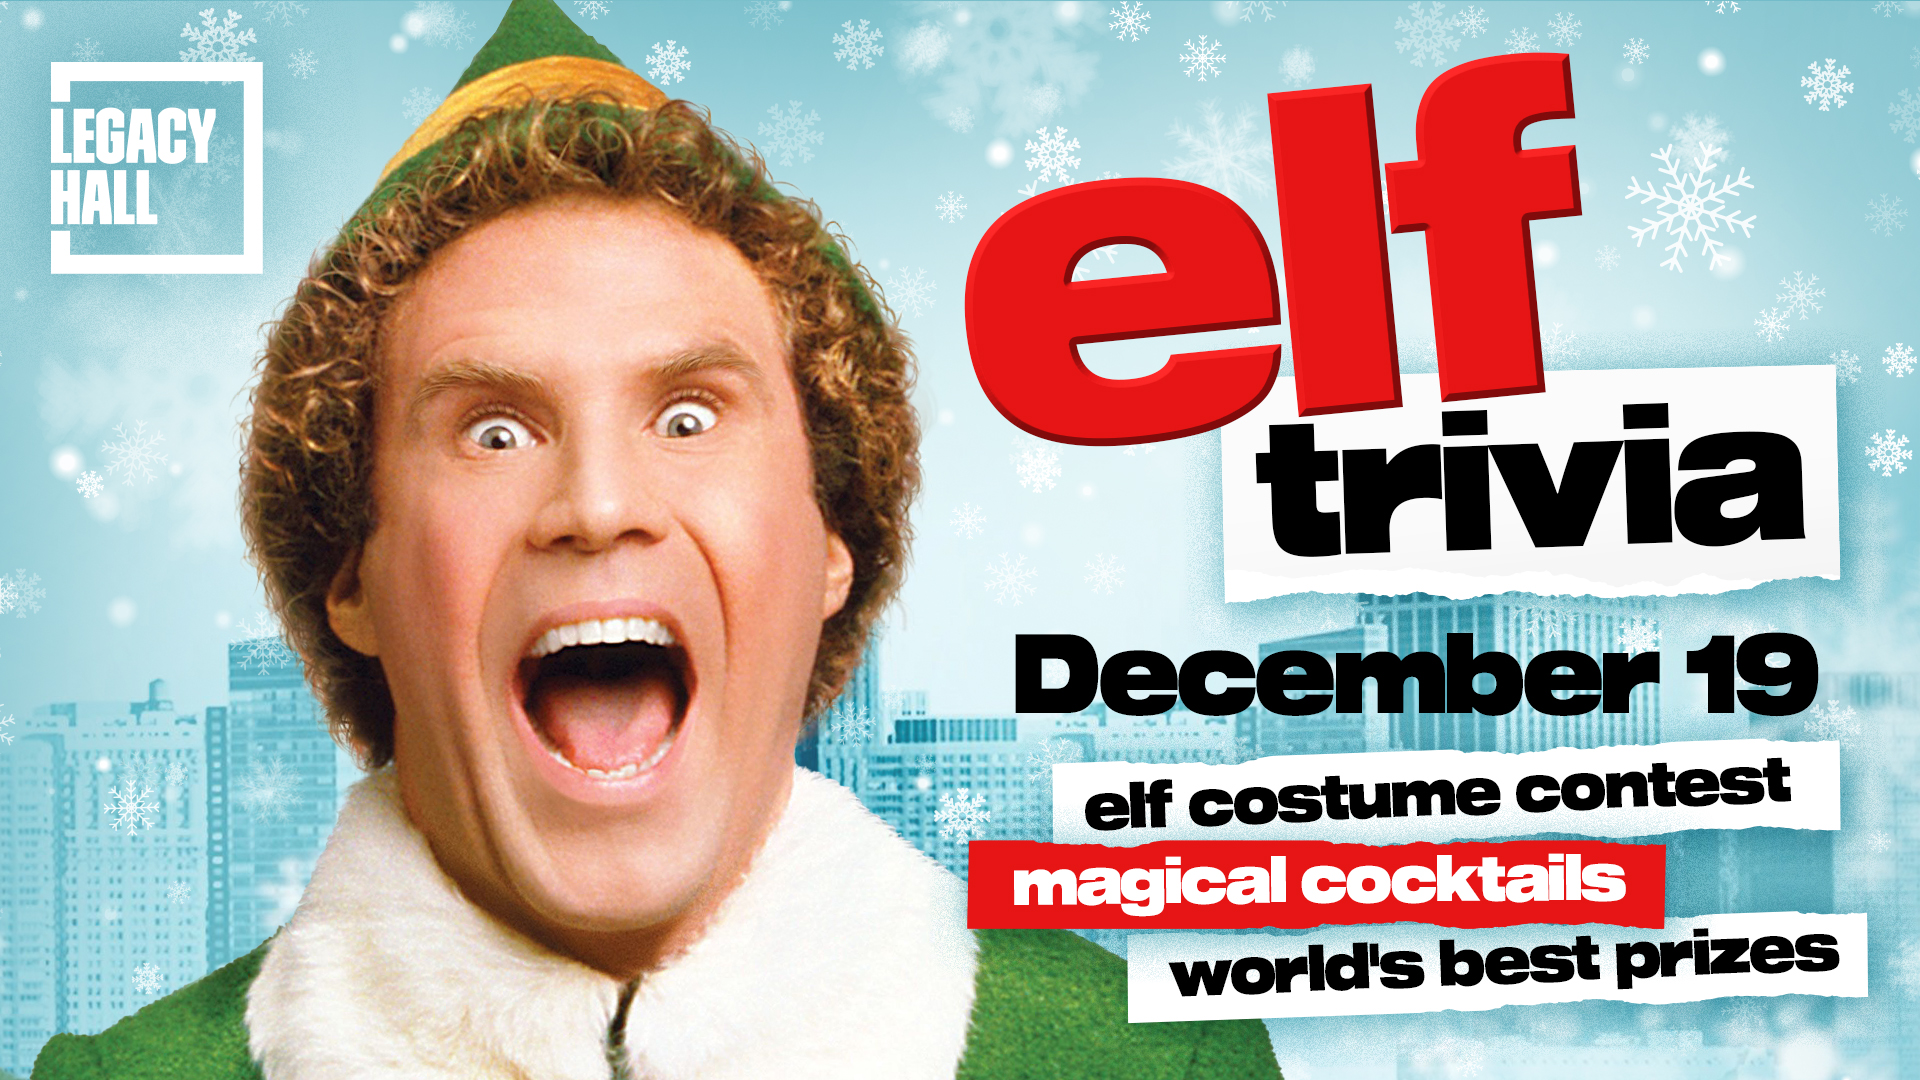 Promo image of Elf Trivia Night